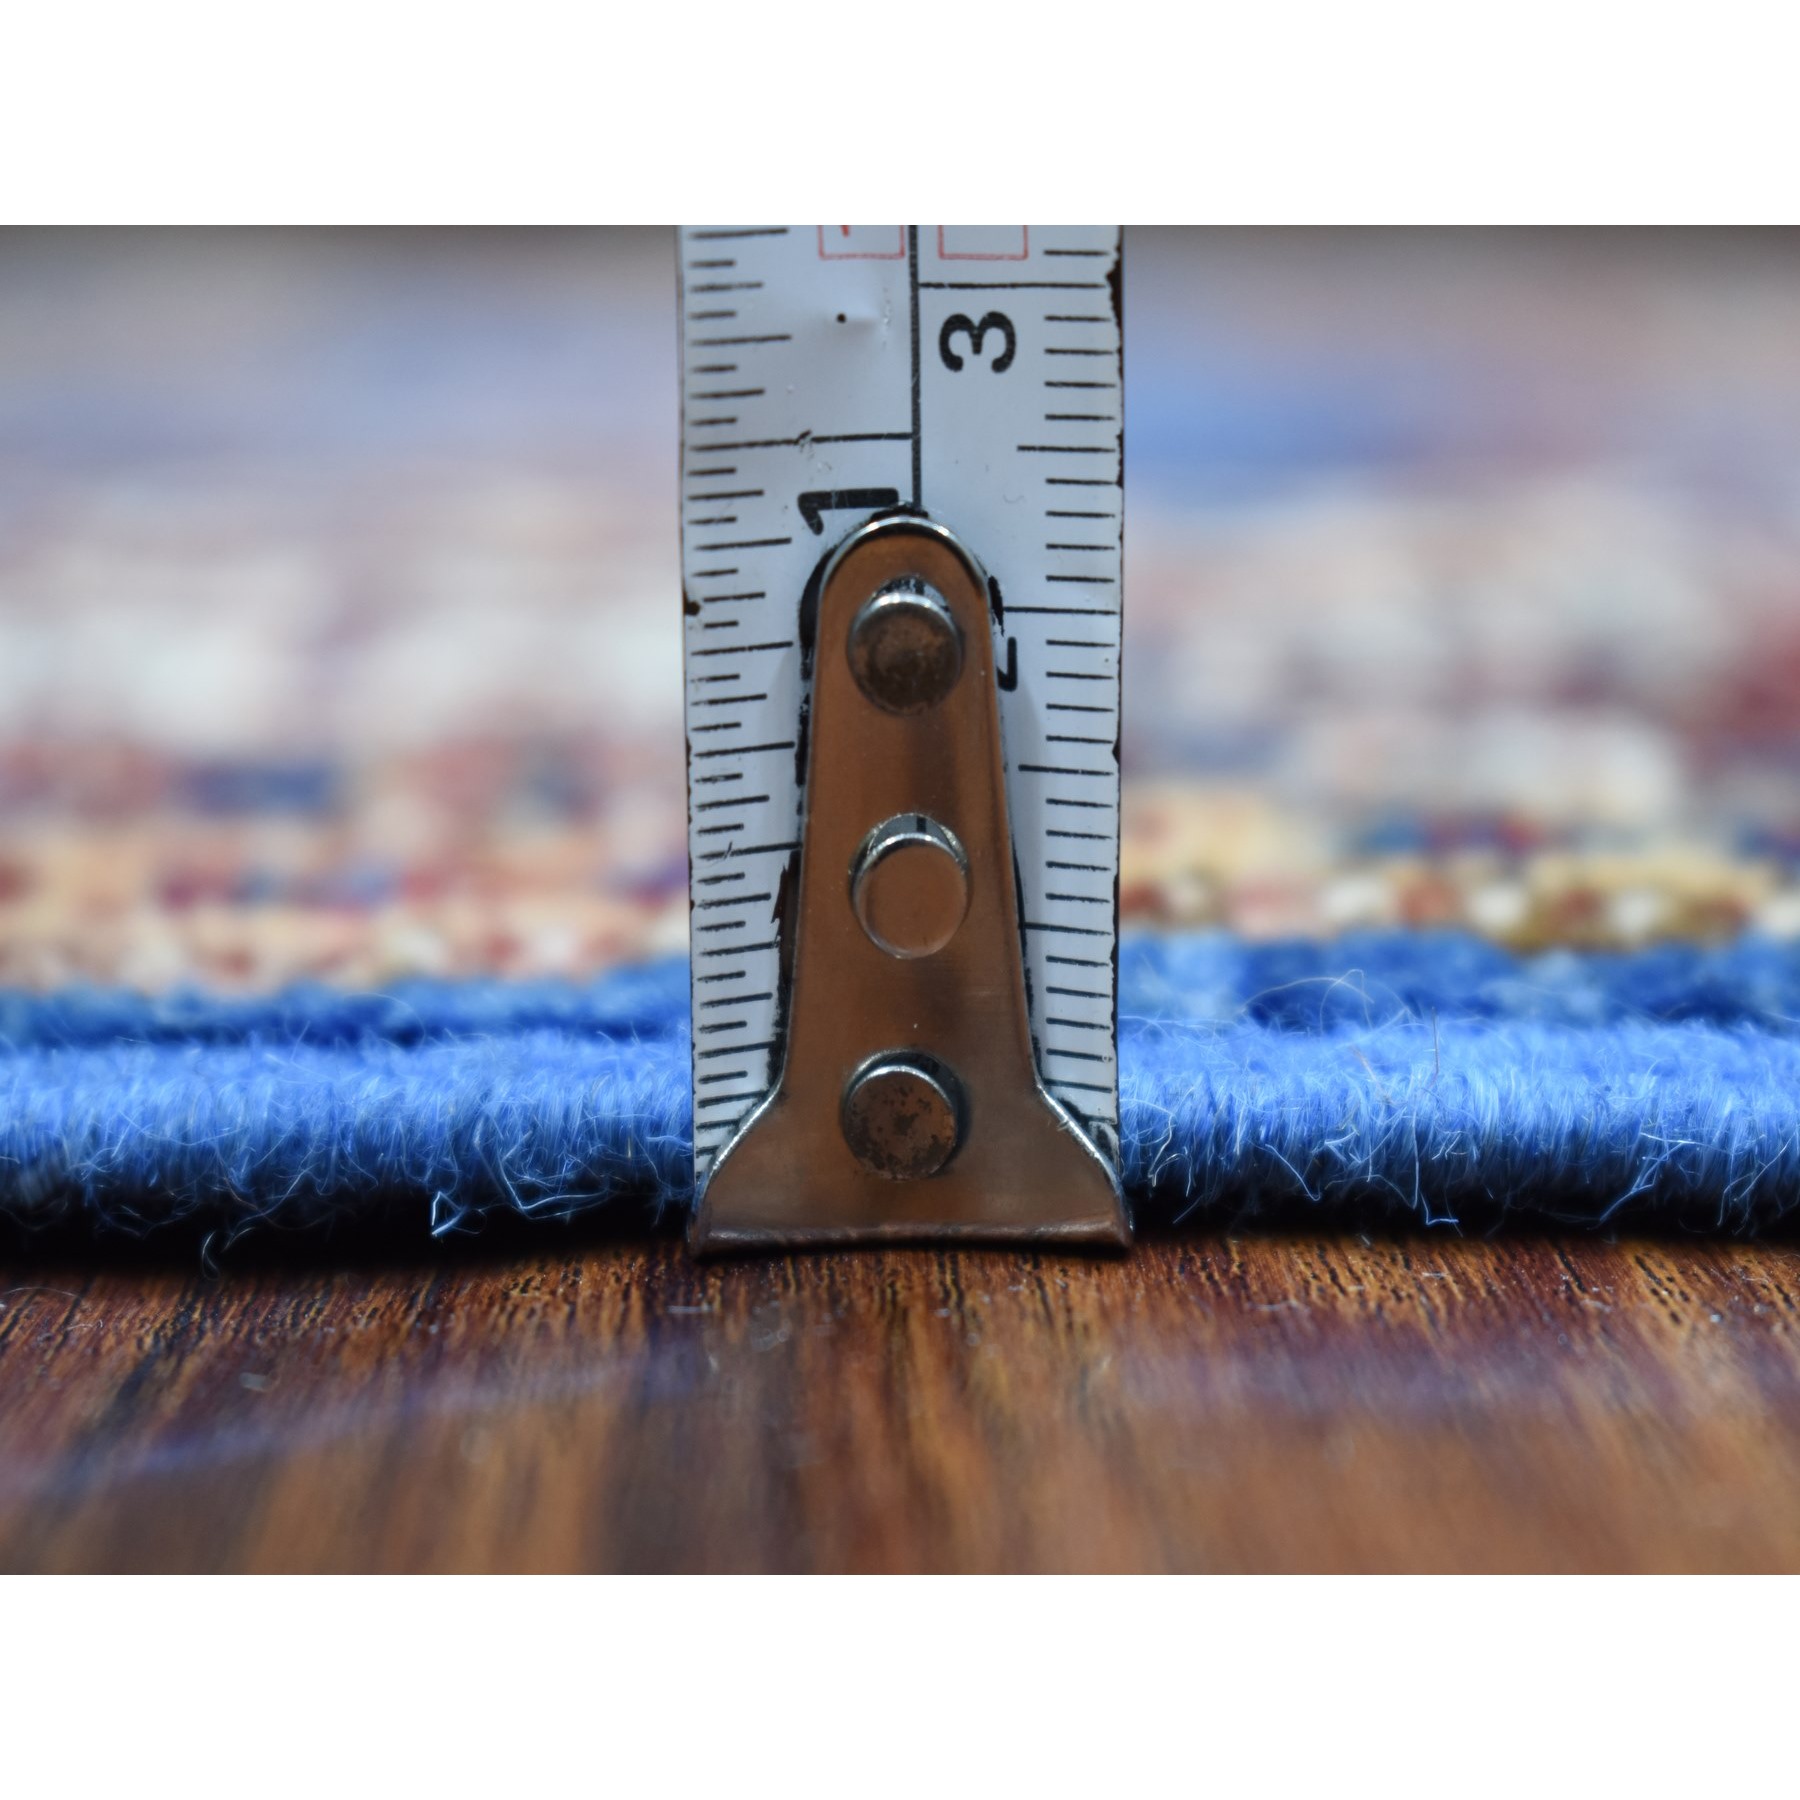 2'10"x37'2" Super Kazak with Tribal Medallions Design Hand Woven Soft Organic Wool Faded Blue Oriental XL Runner Rug 